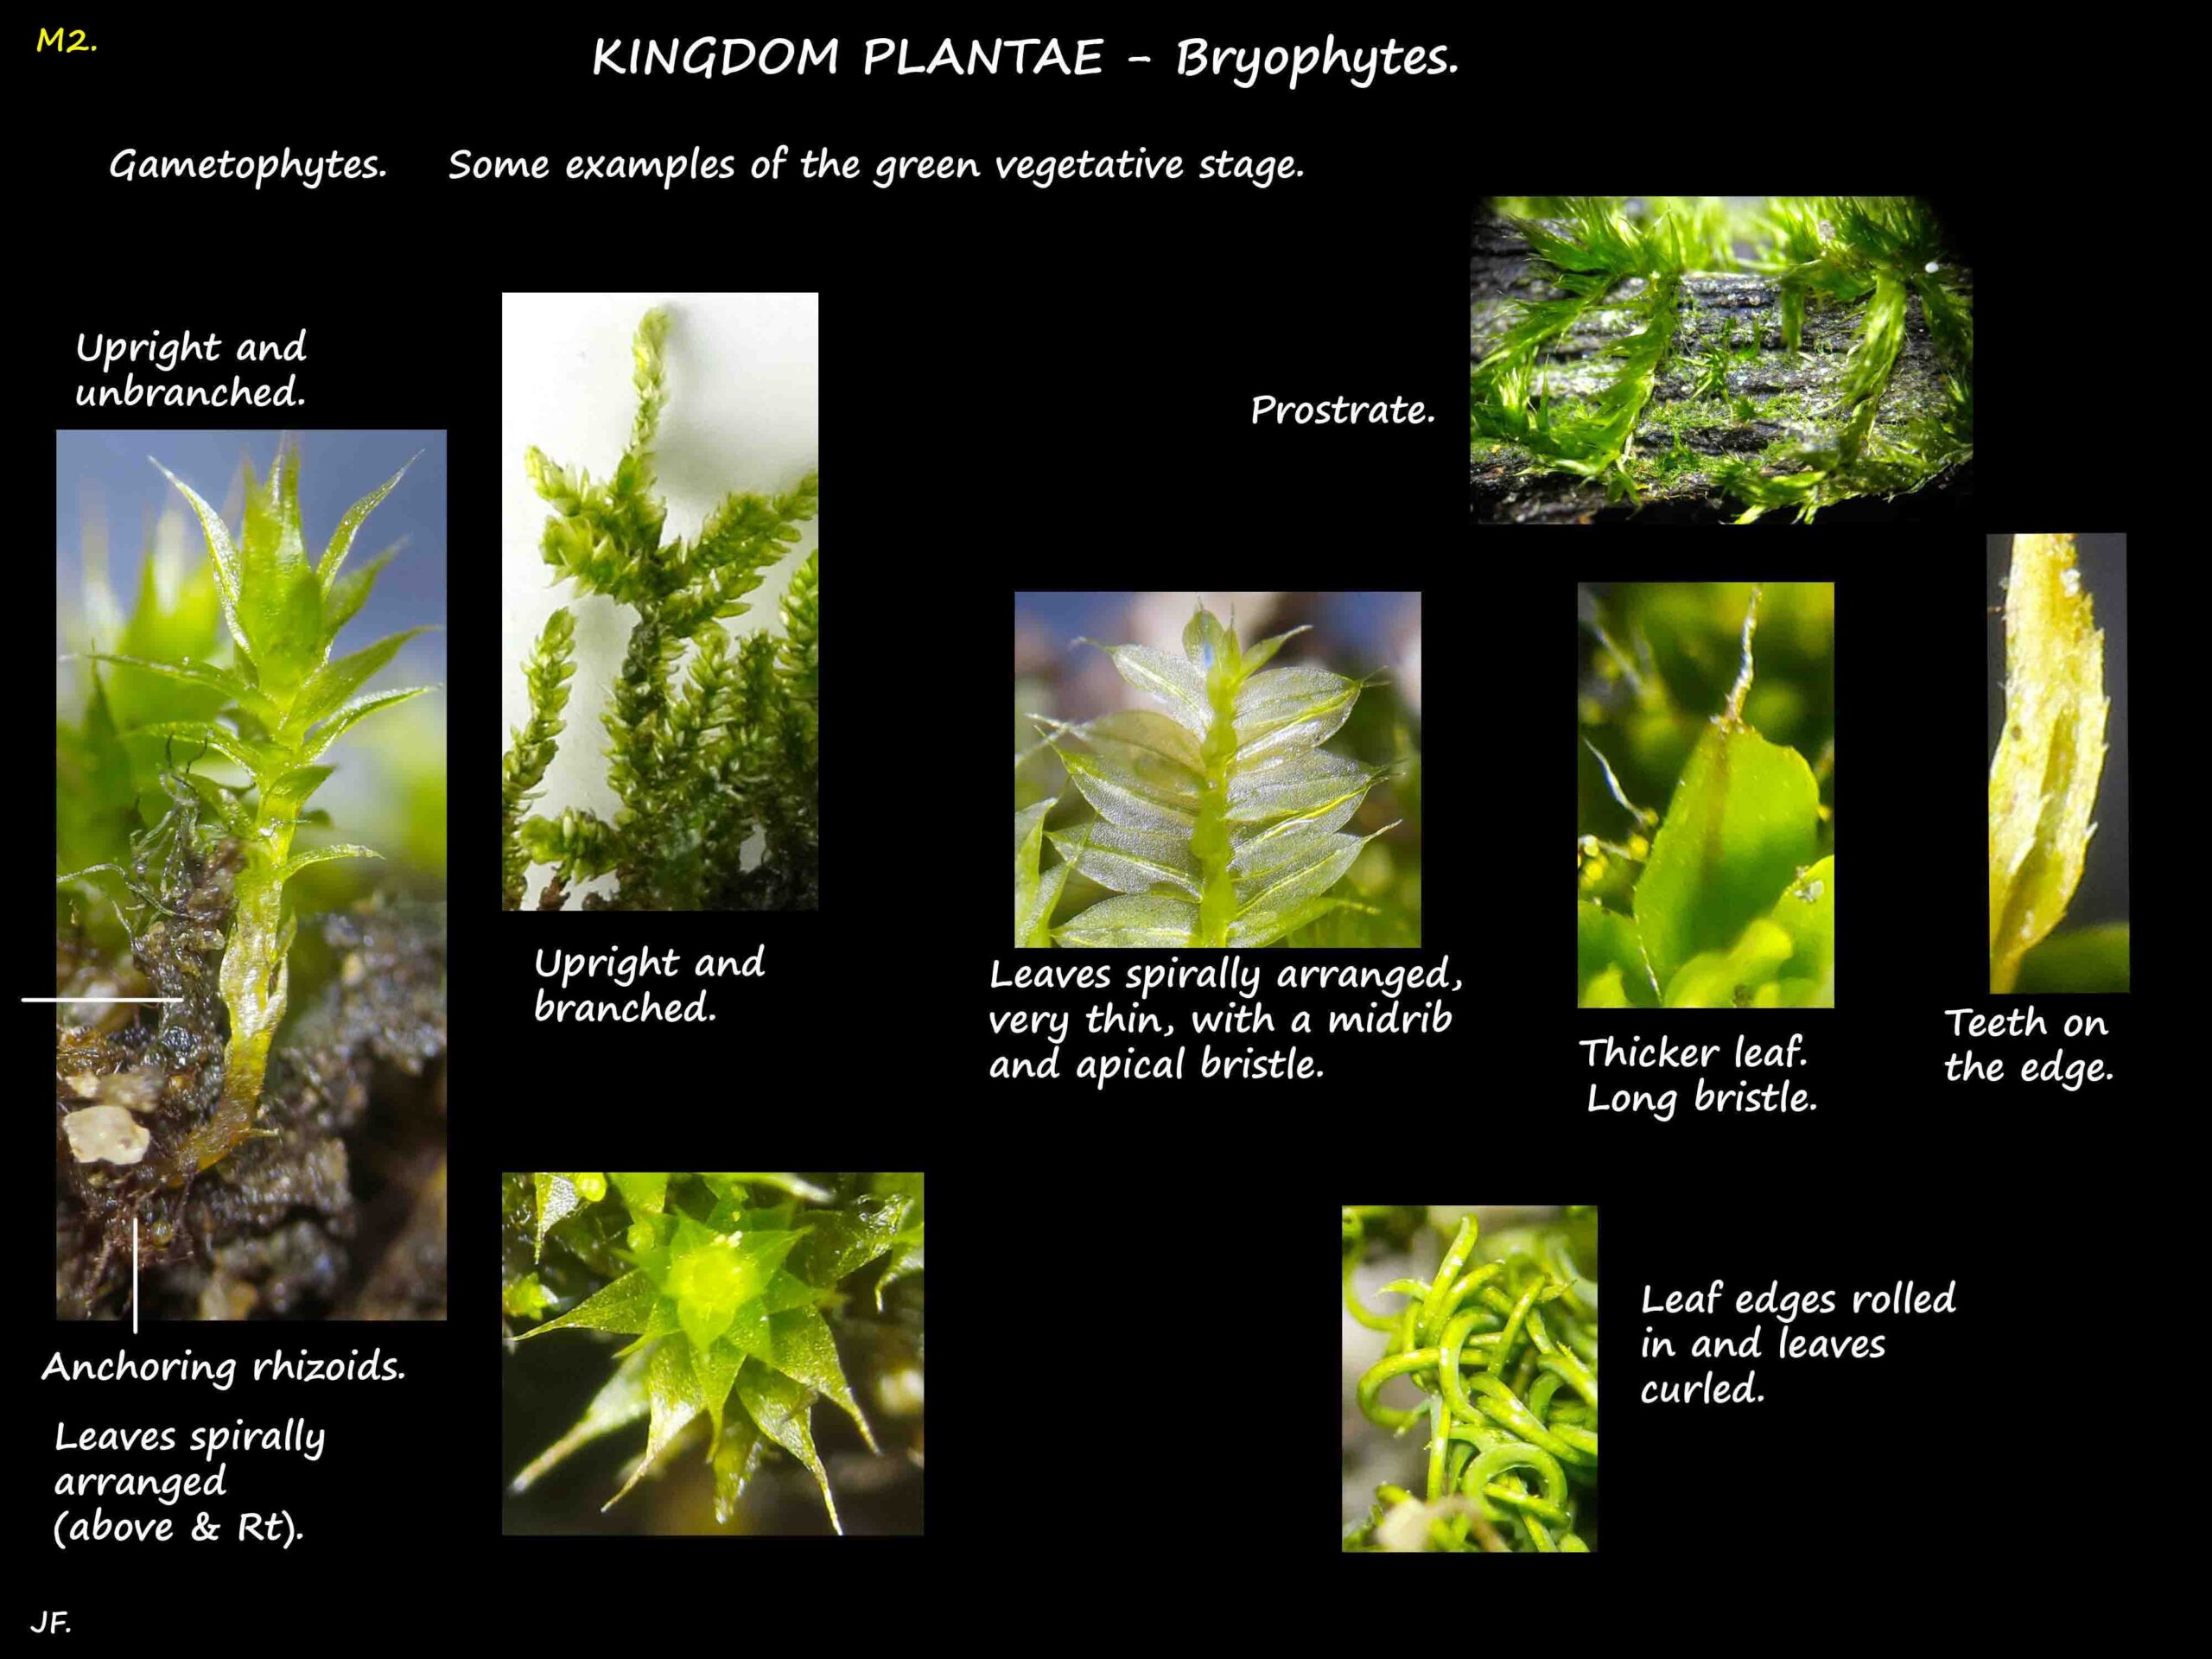 Gametophyte - the vegetative stage